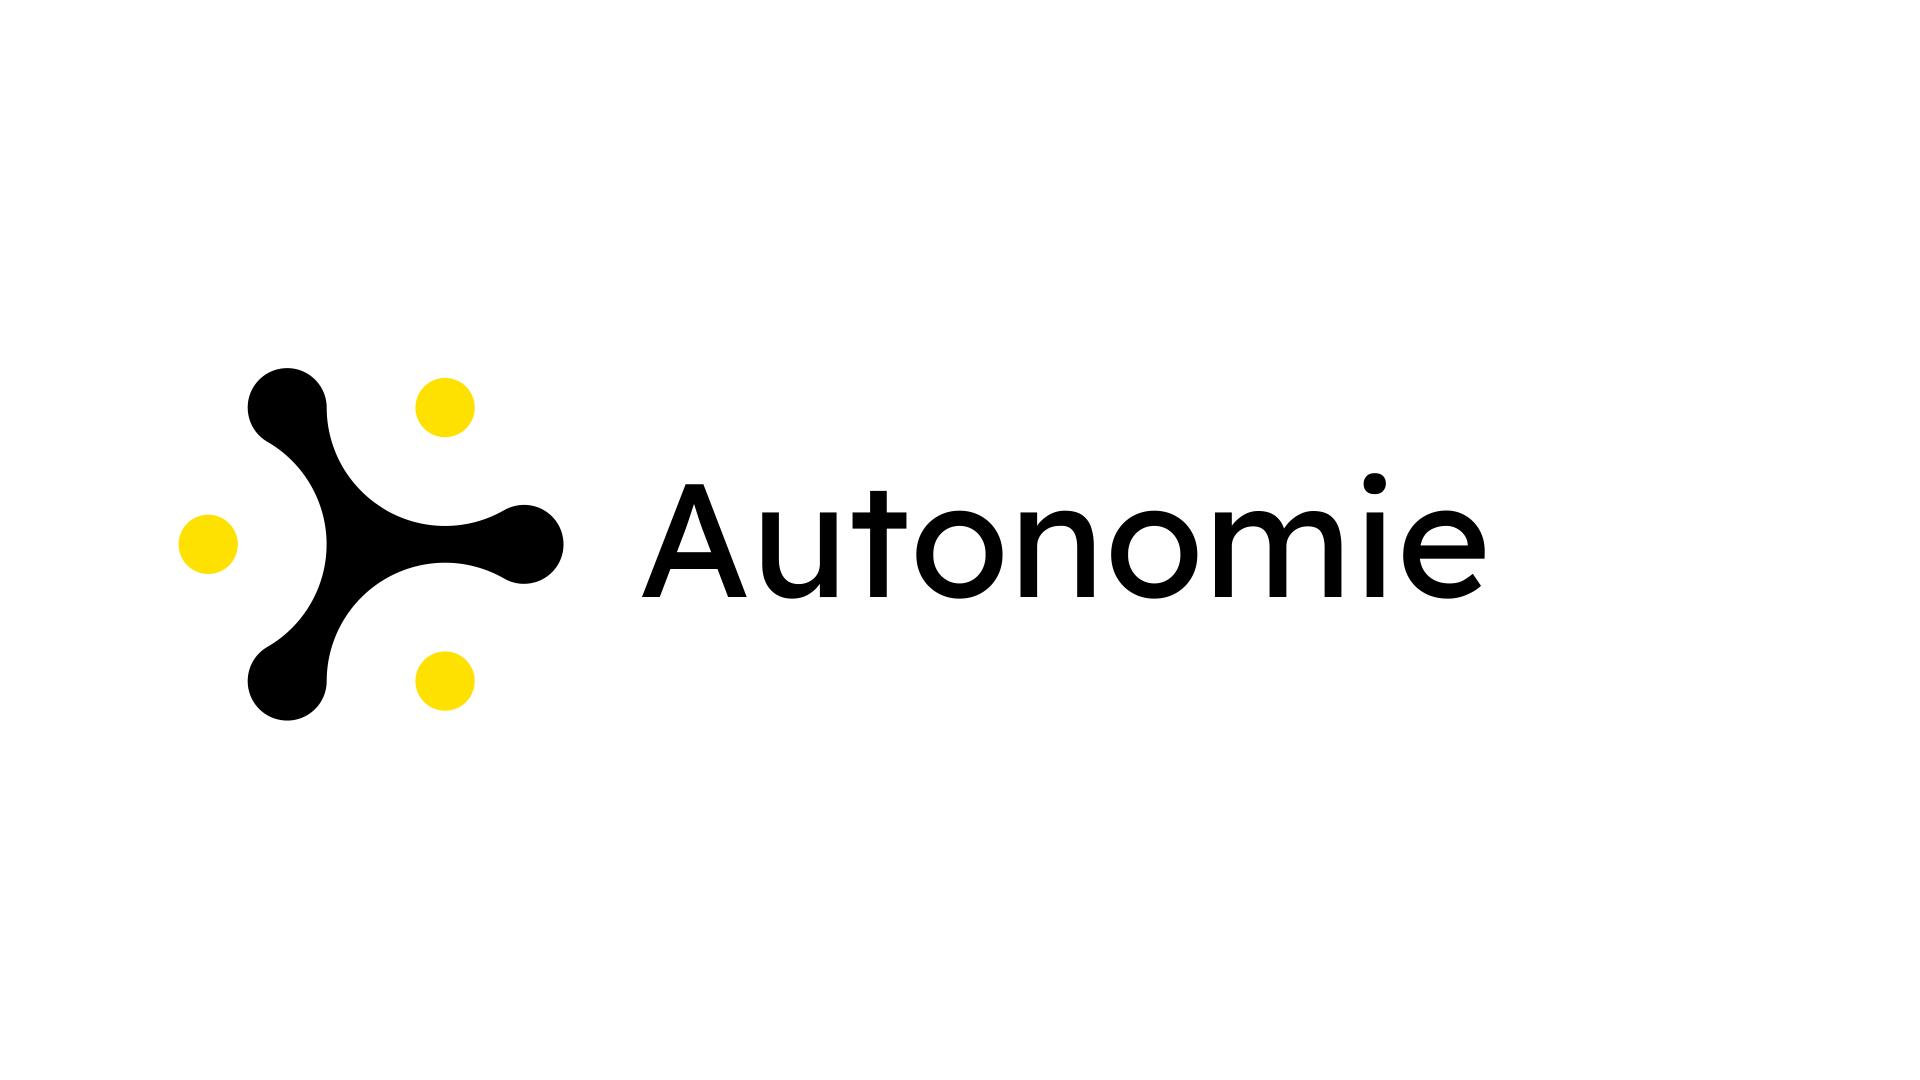 Autonomie